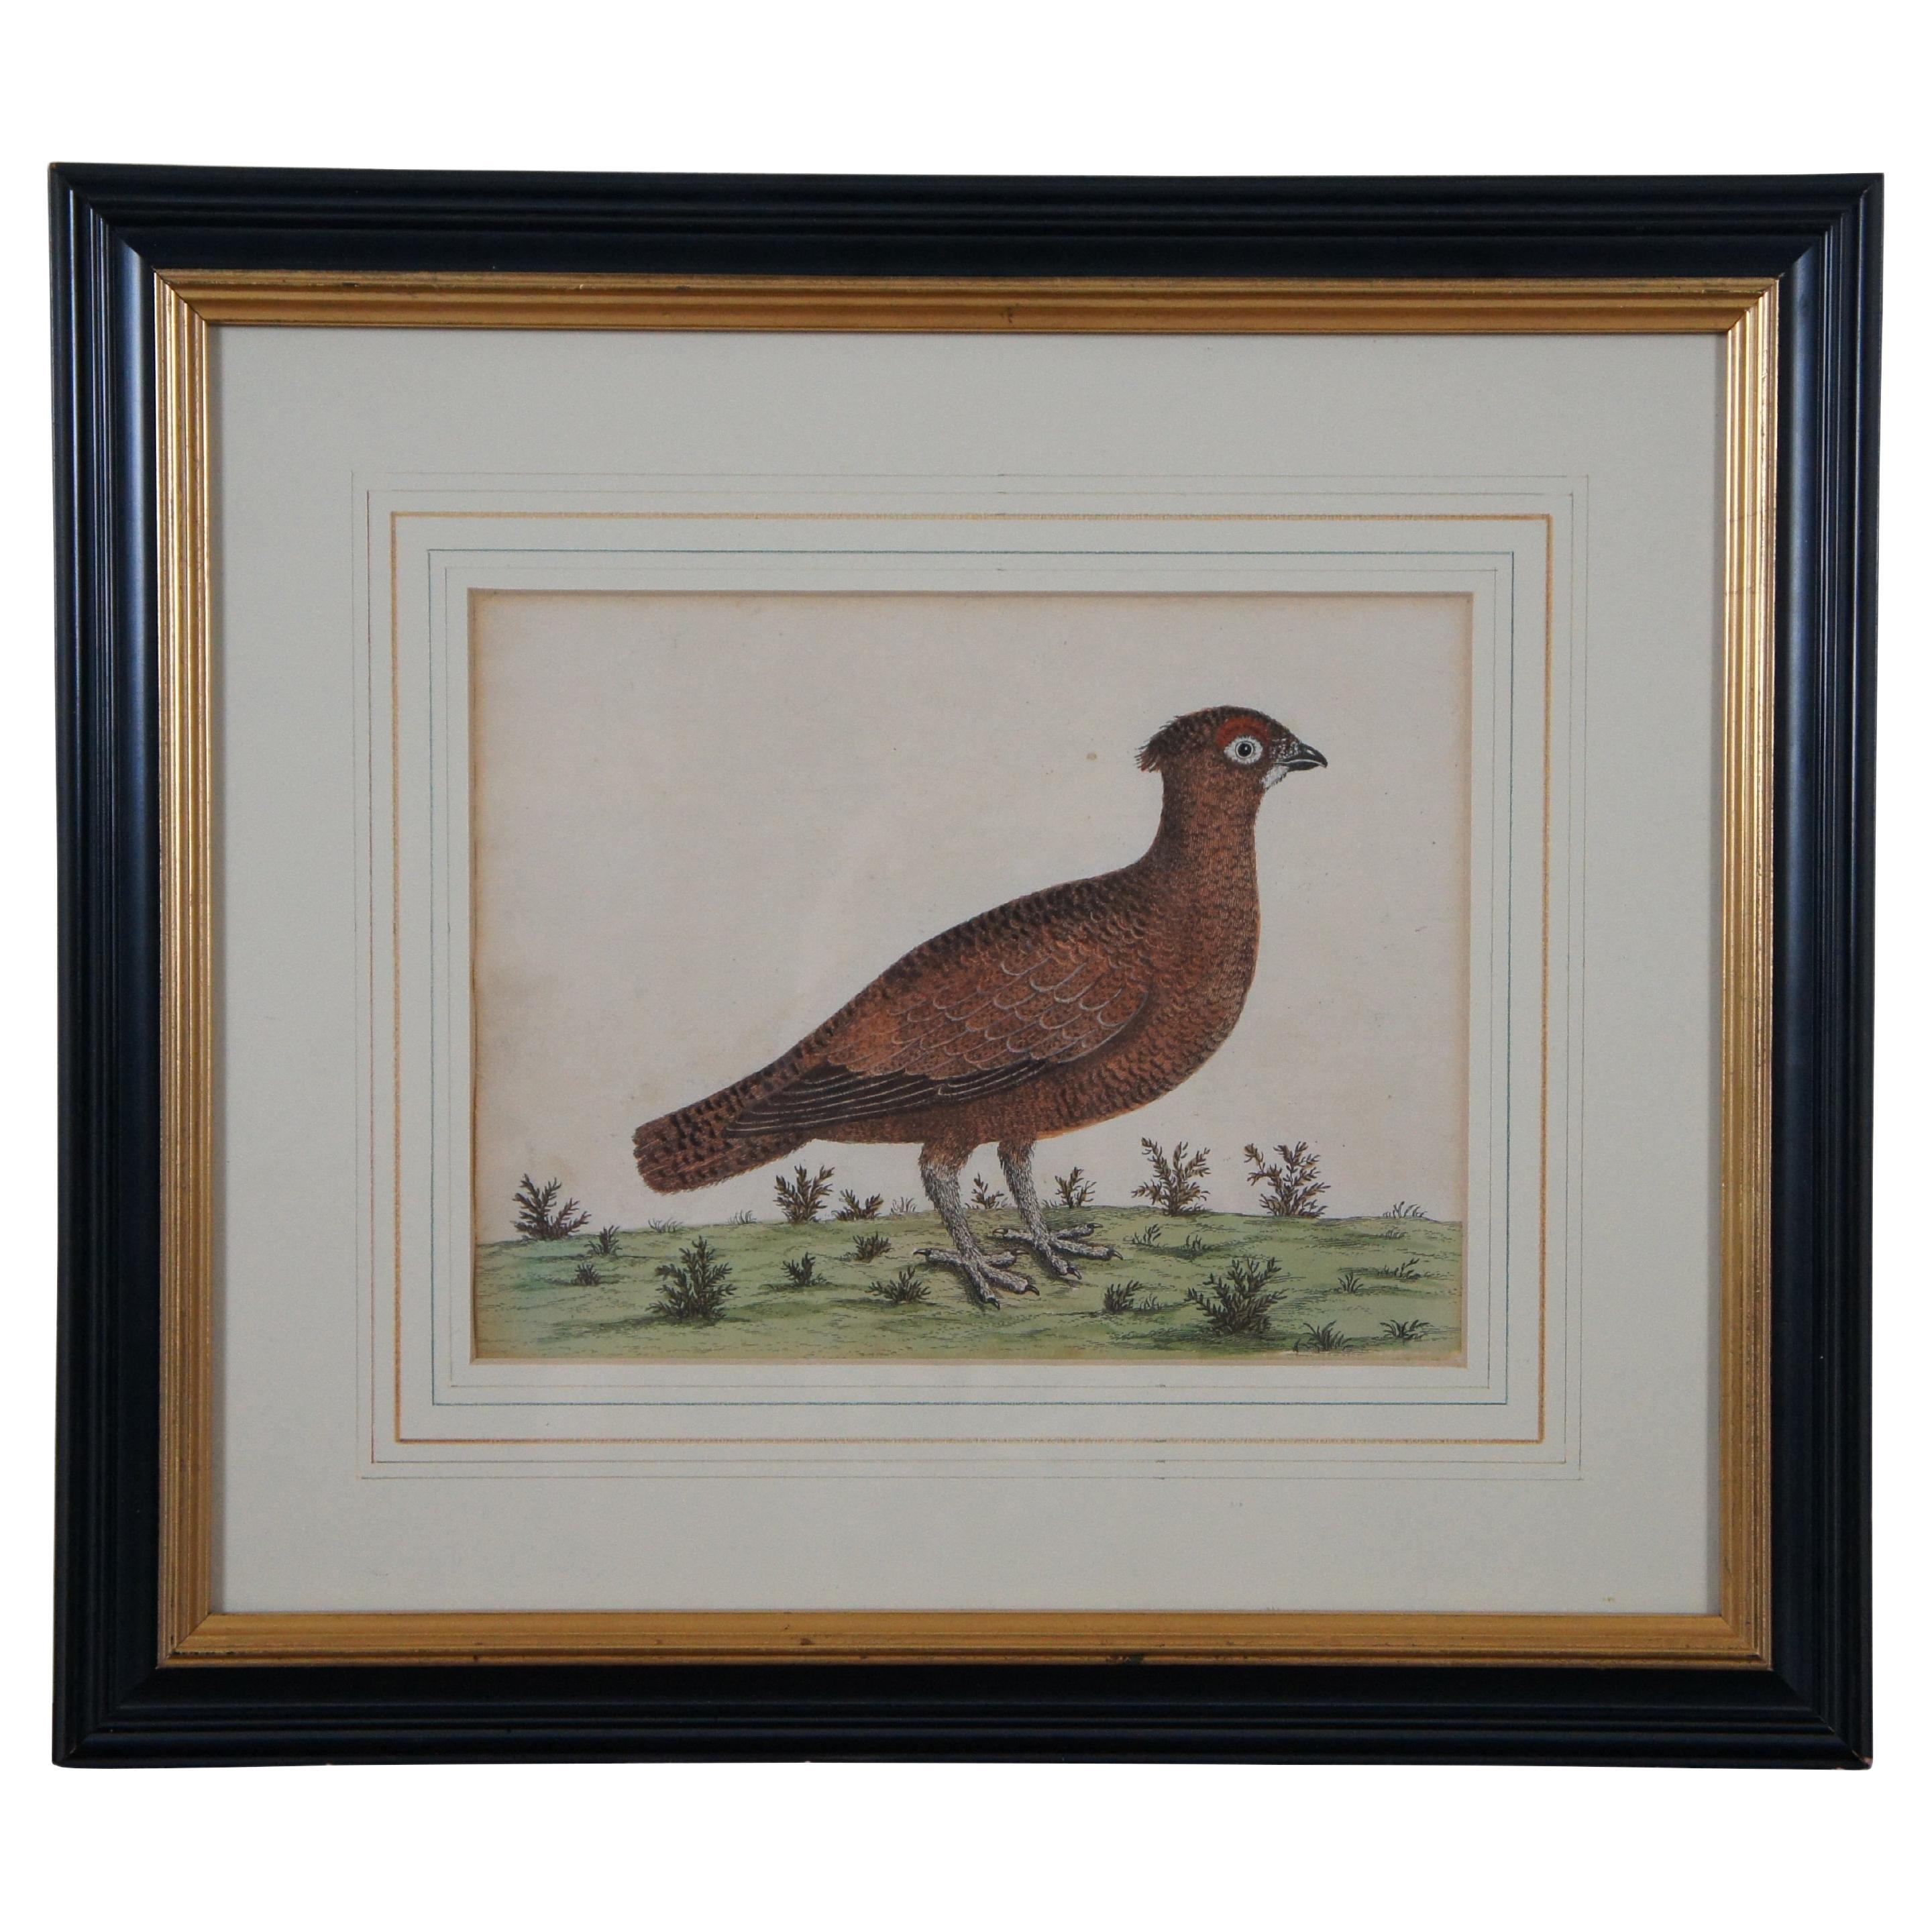 Antique Eleazar Albin Red Grouse Ptarmigan Bird Colored Engraving Print